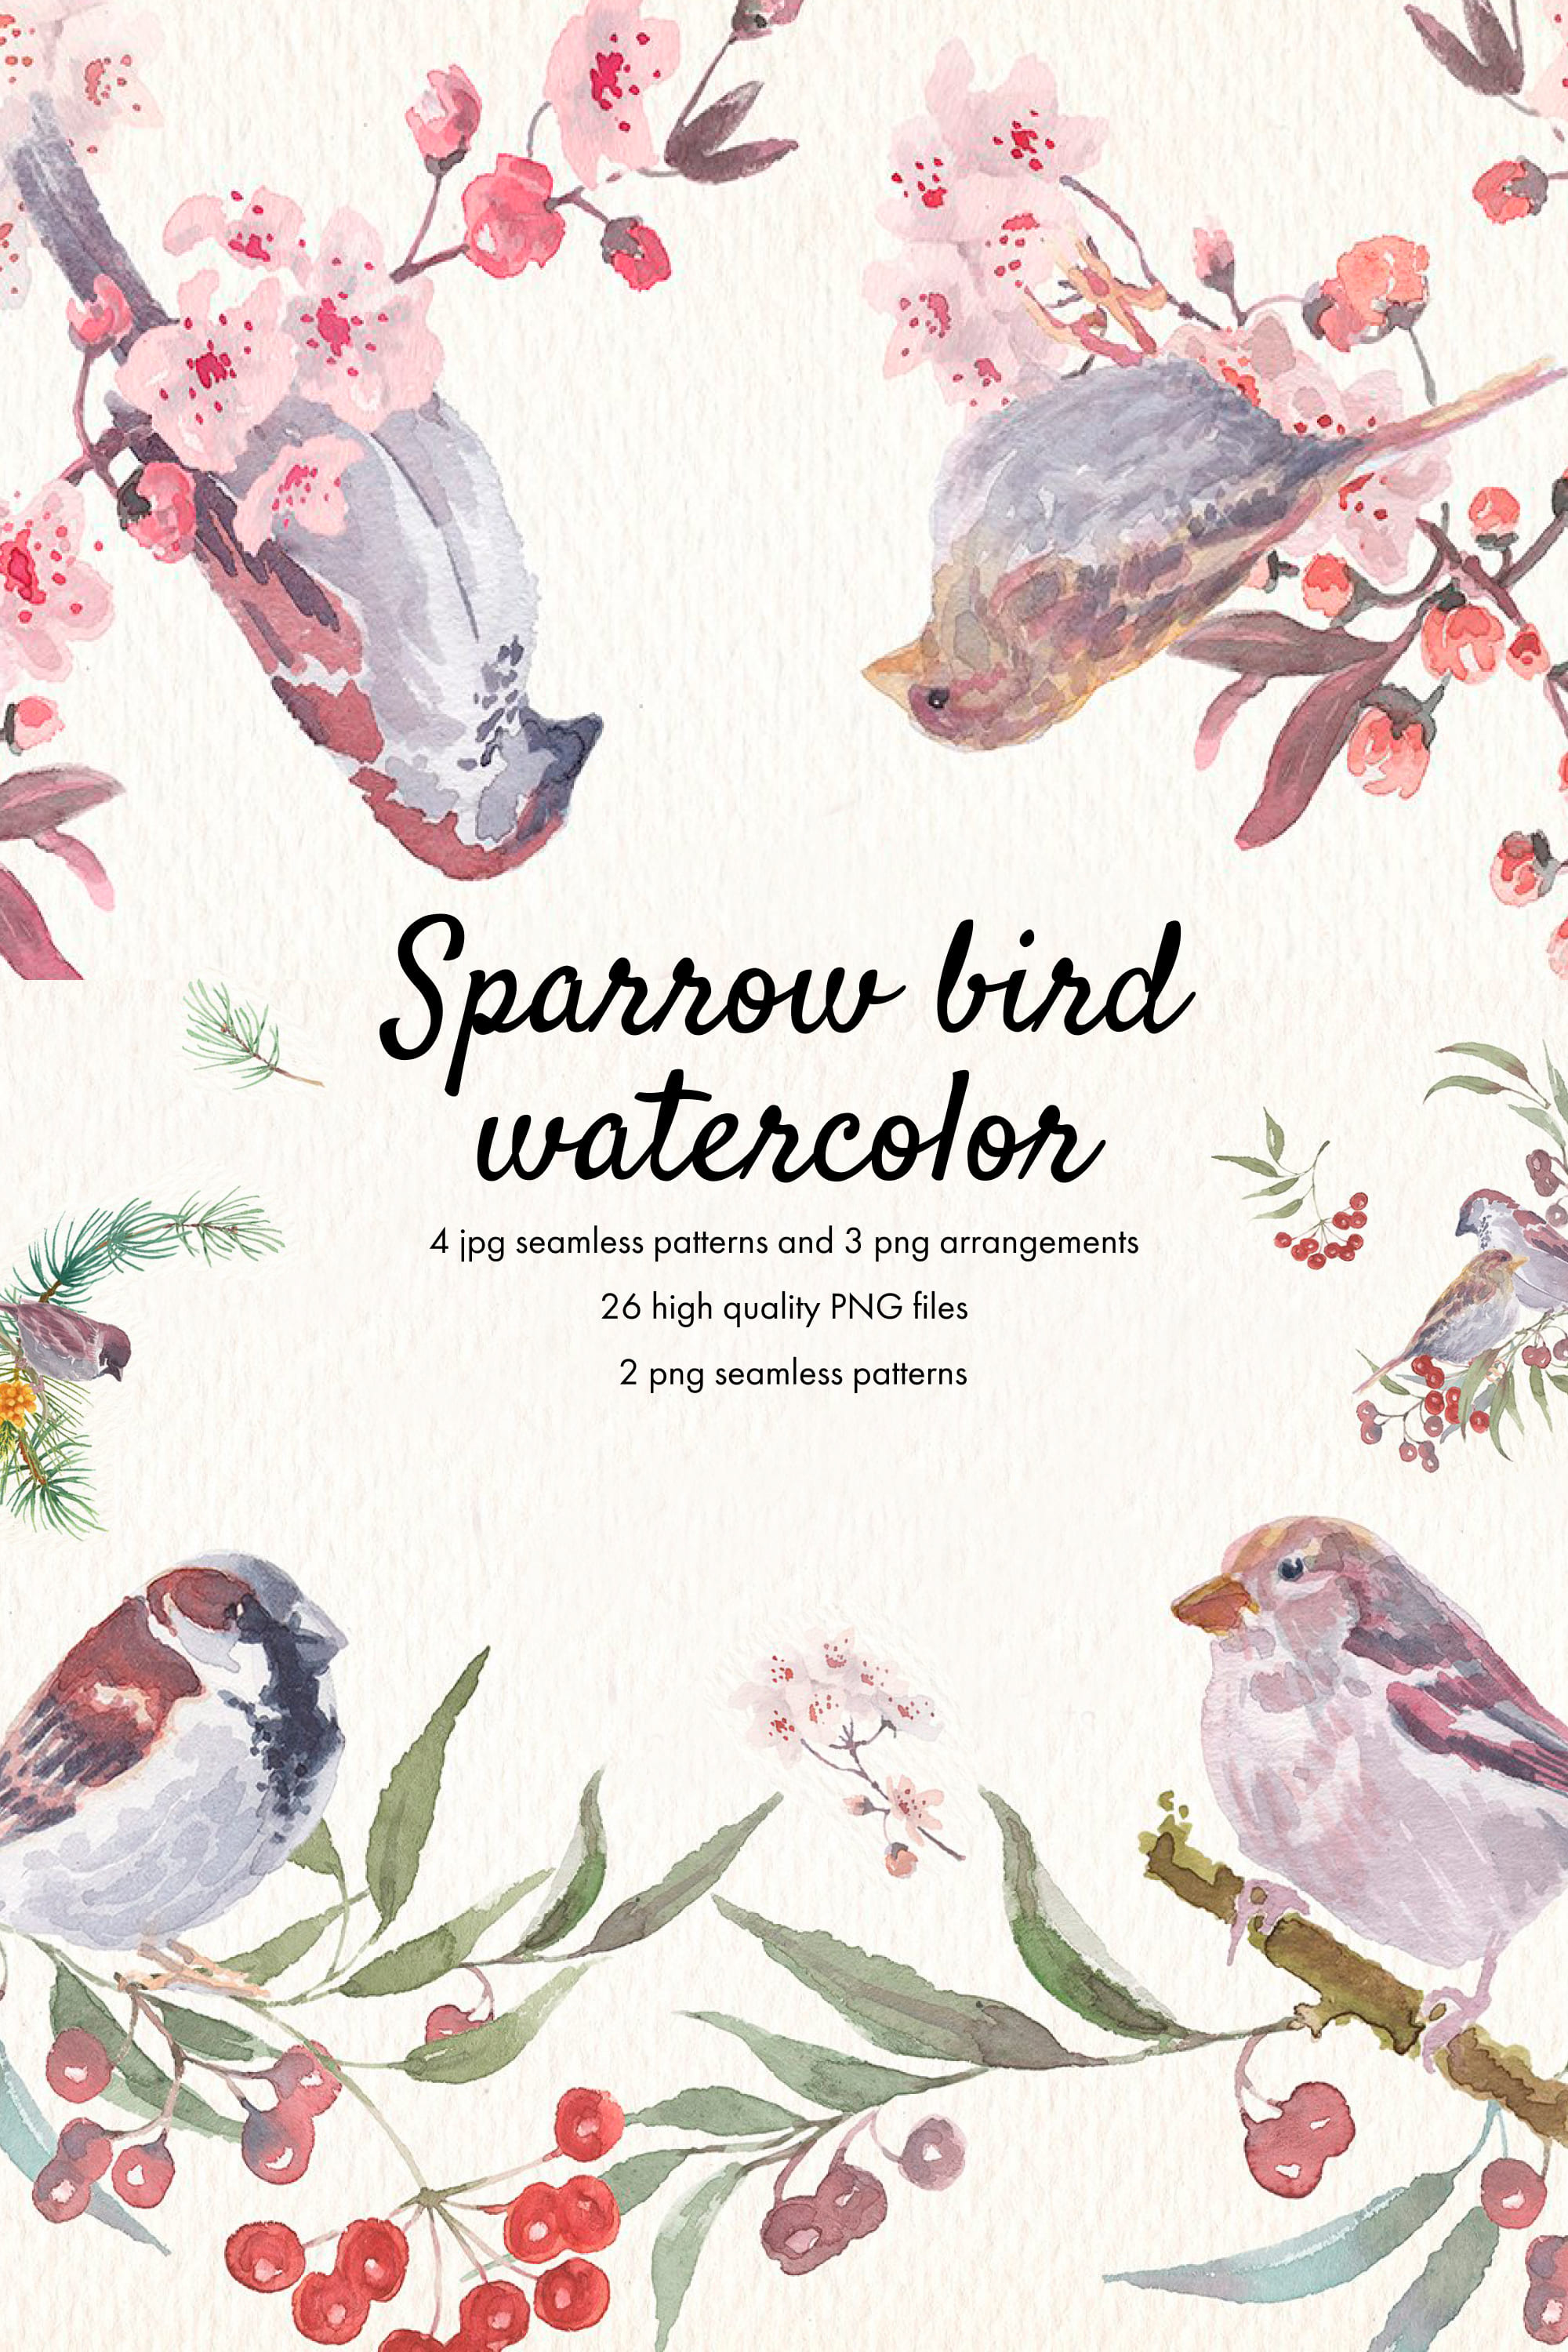 Sparrow bird watercolor clipart - Pinterest image preview.